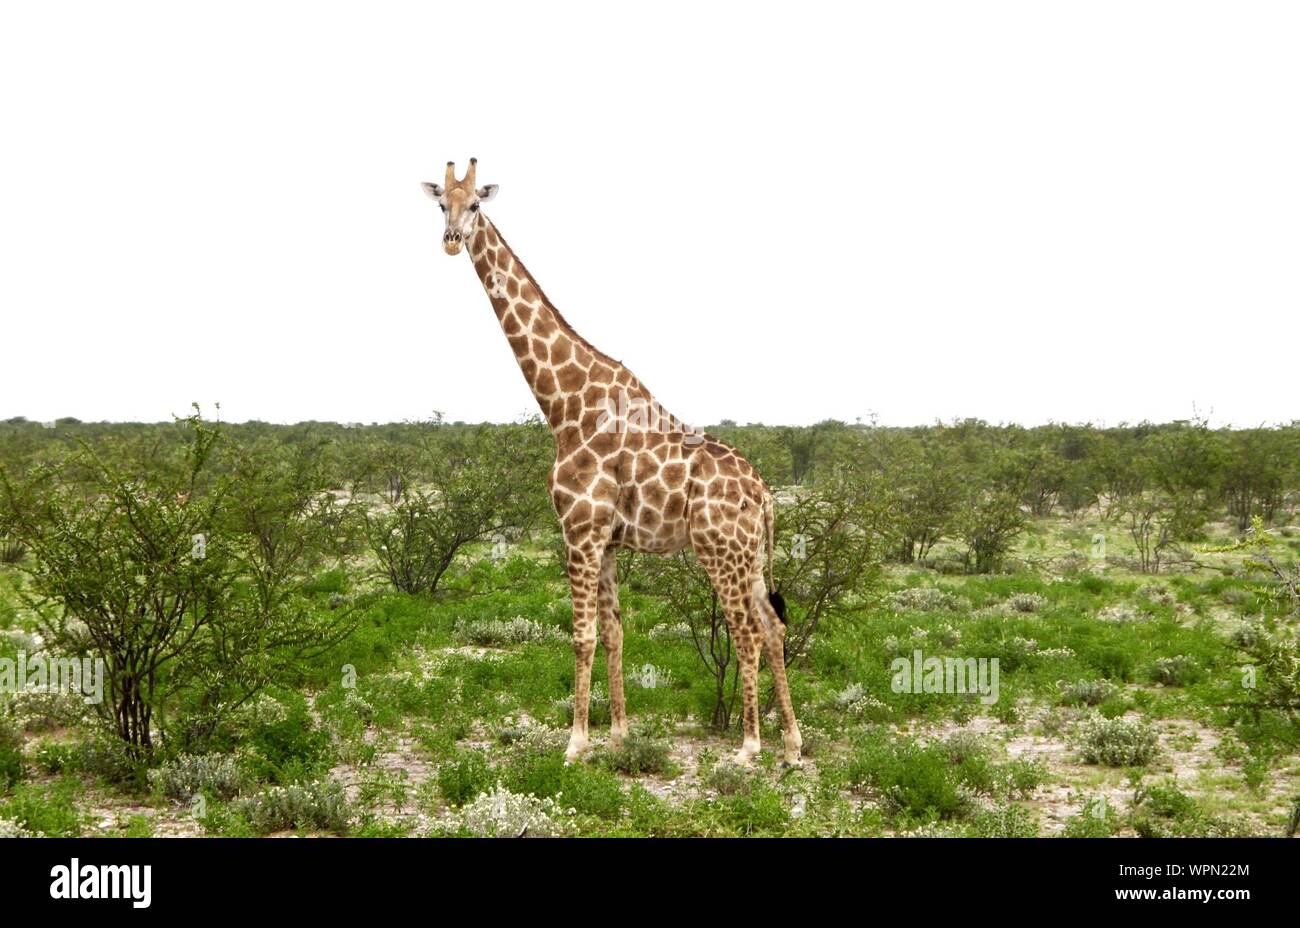 Giraffe In African Landscape Stock Photo